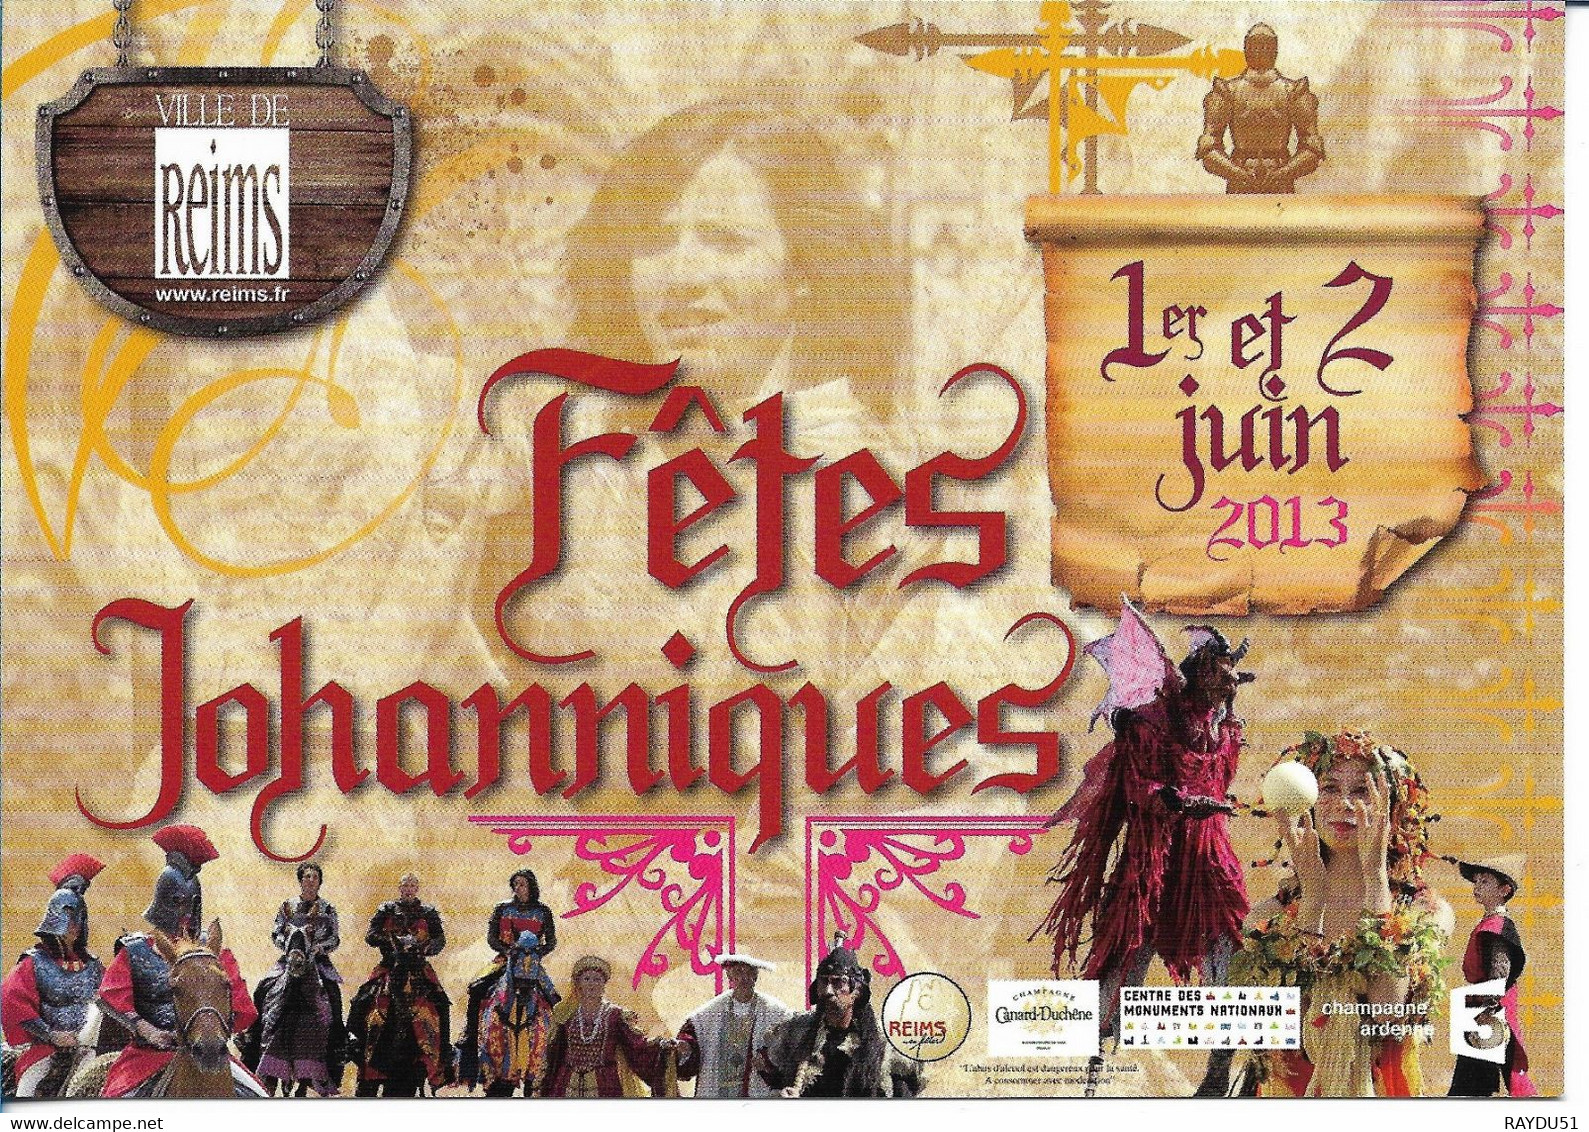 FETES JOHANNIQUES 2013 - Champagne - Ardenne